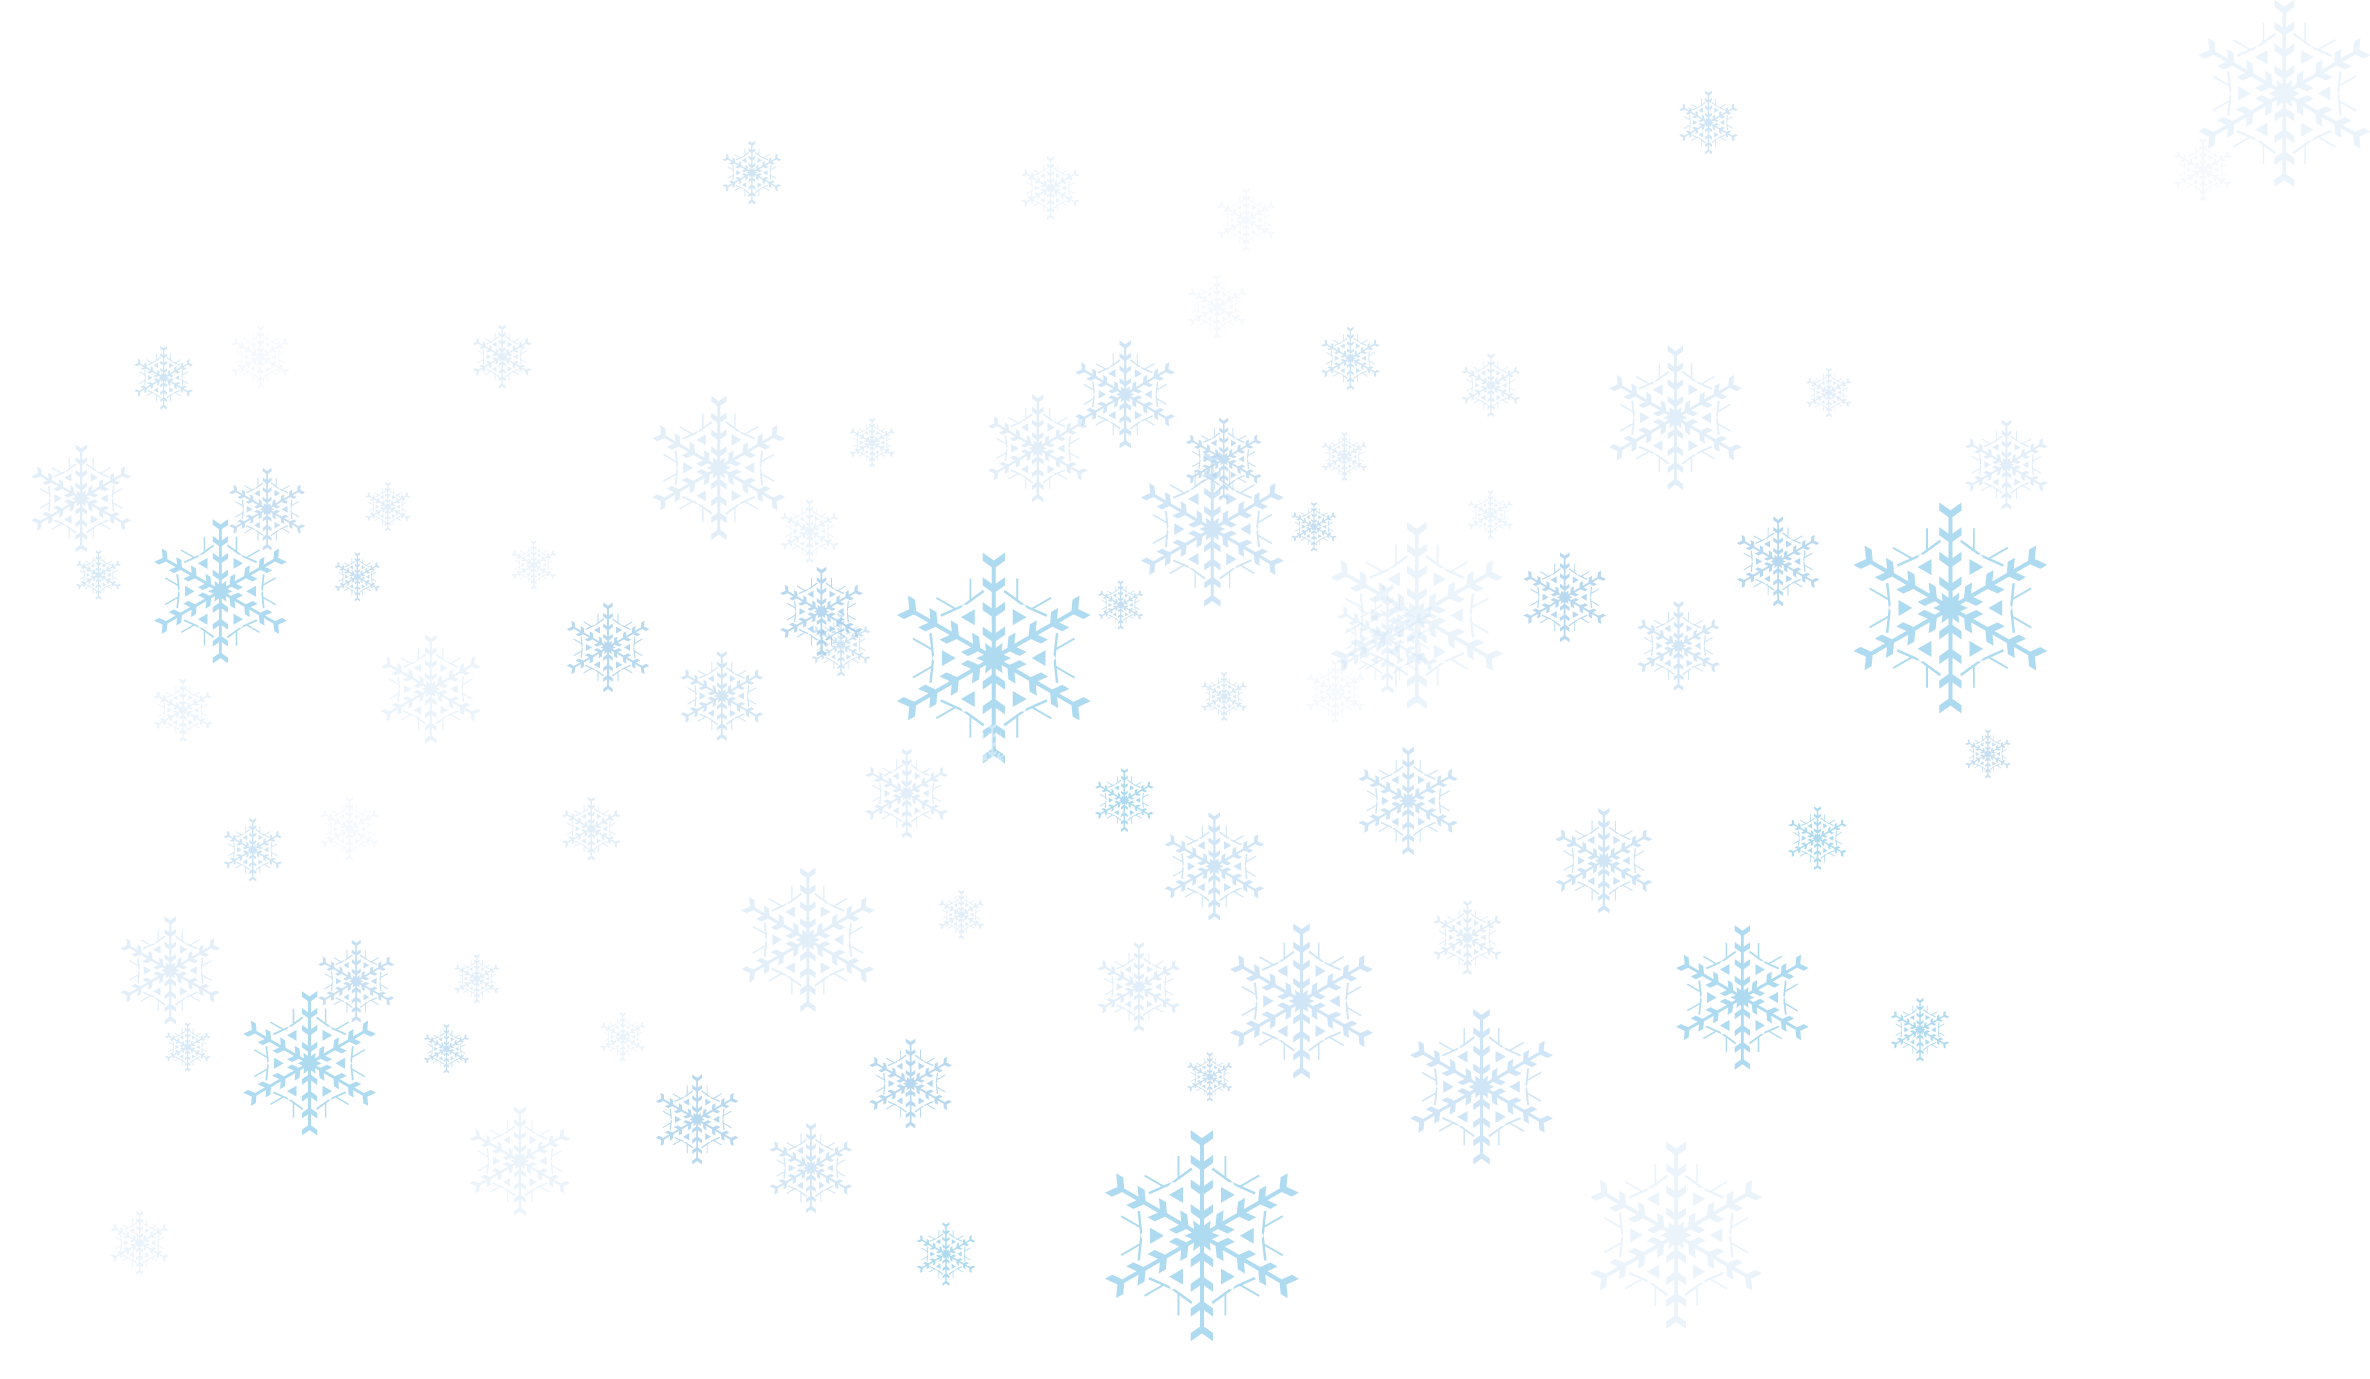 Snowflakes PNG Transparent Snowflakes.PNG Images. | PlusPNG